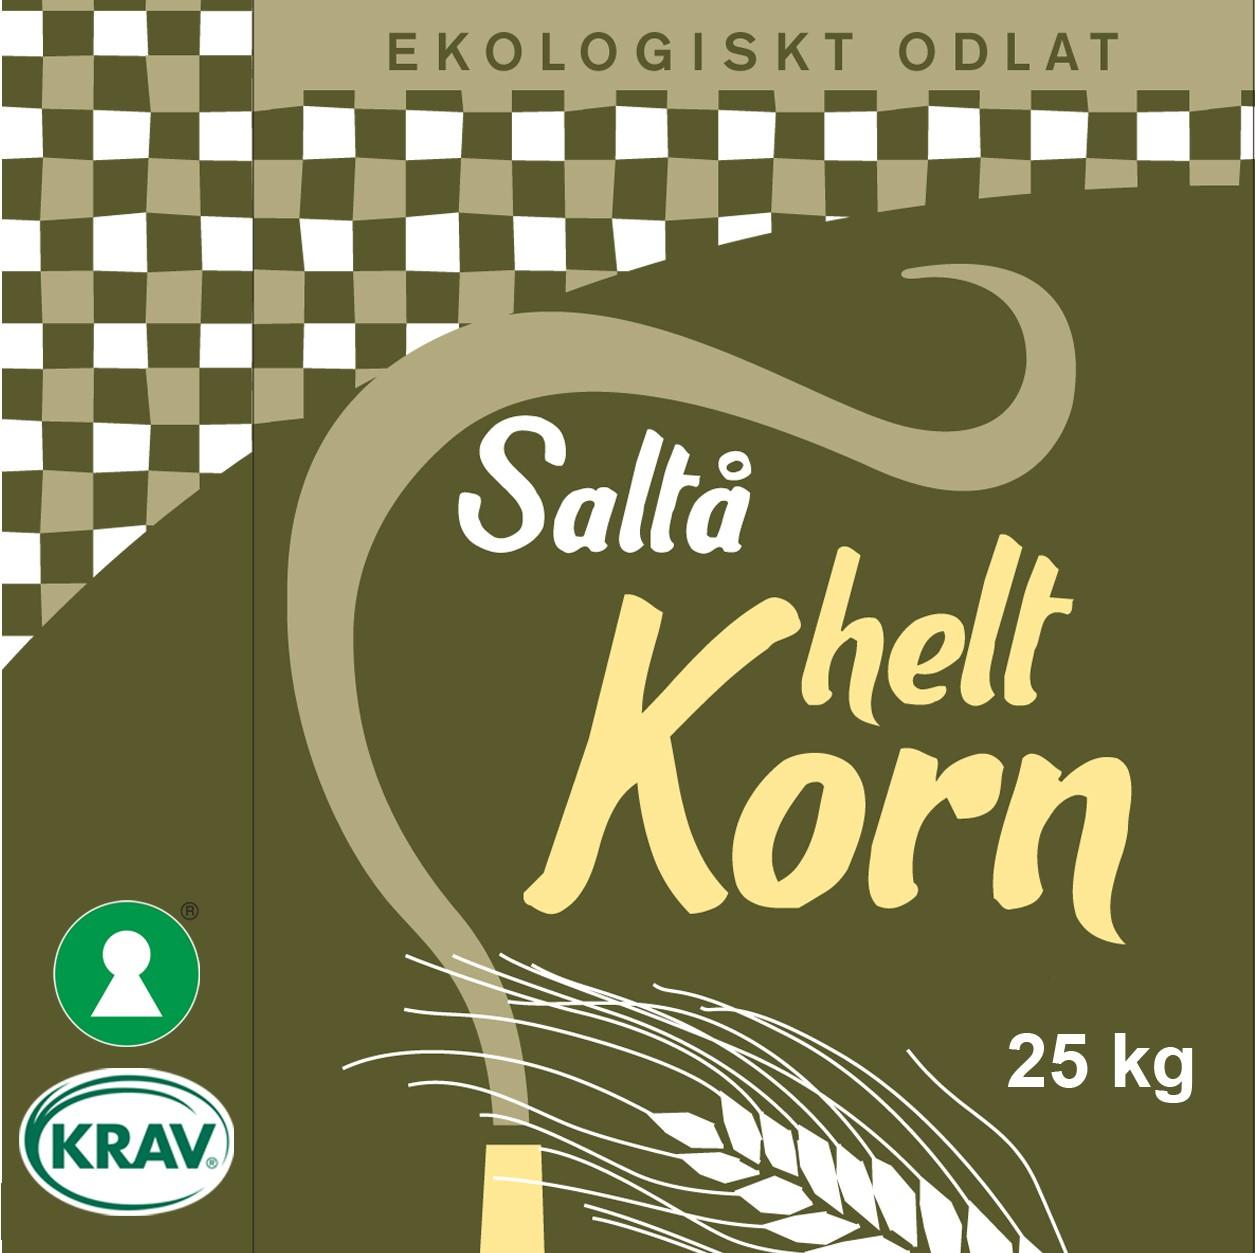 Saltå Kvarn's Korn komplett'